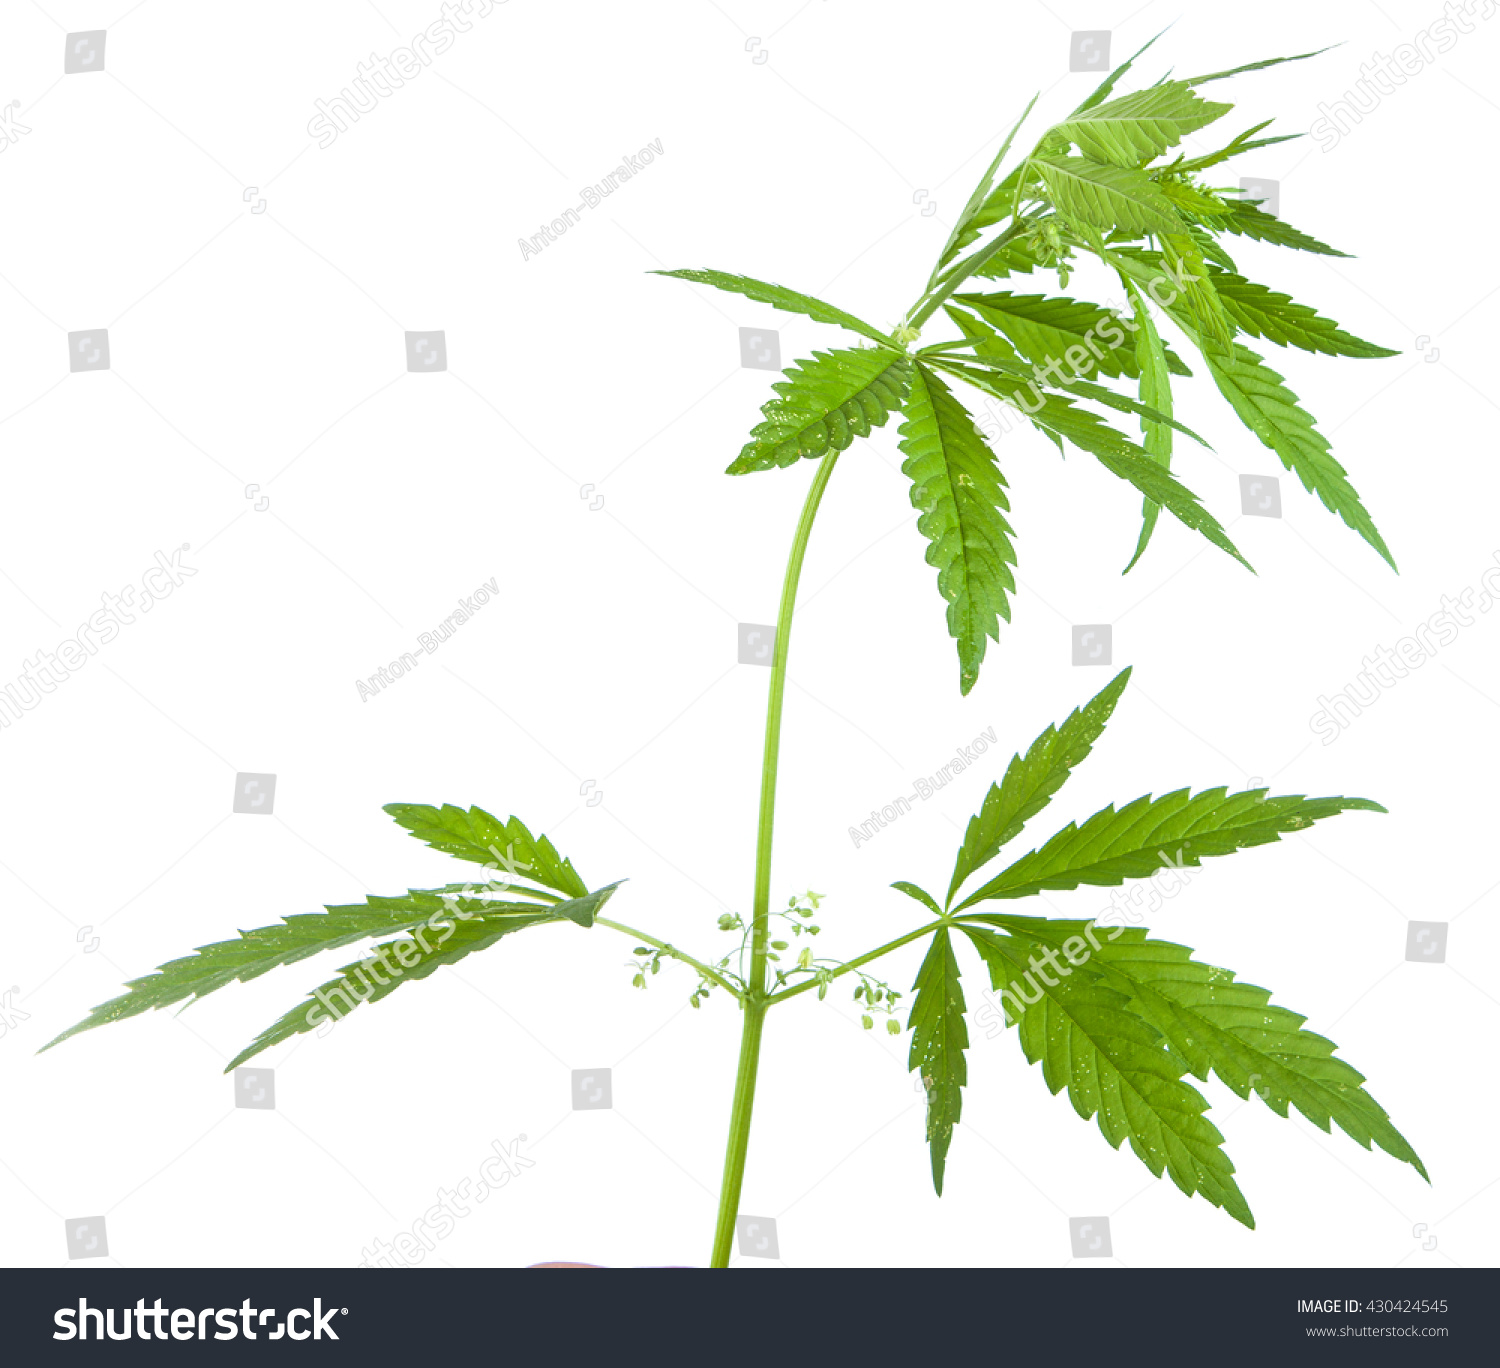 Bush cannabis isolated on white background #430424545